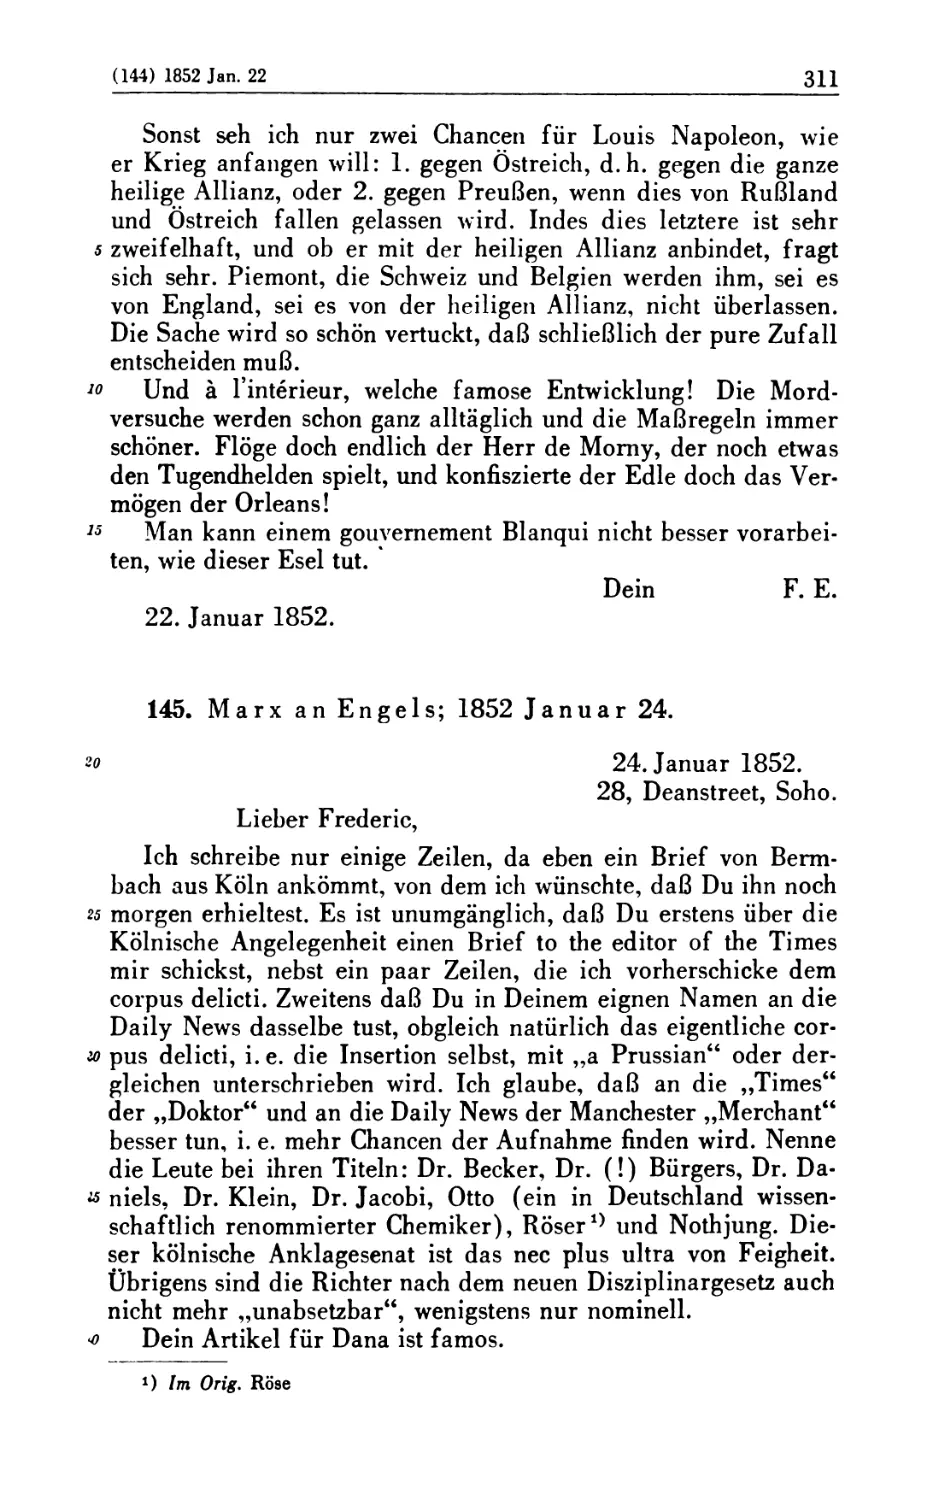 145. Marx an Engels; 1852 Januar 24